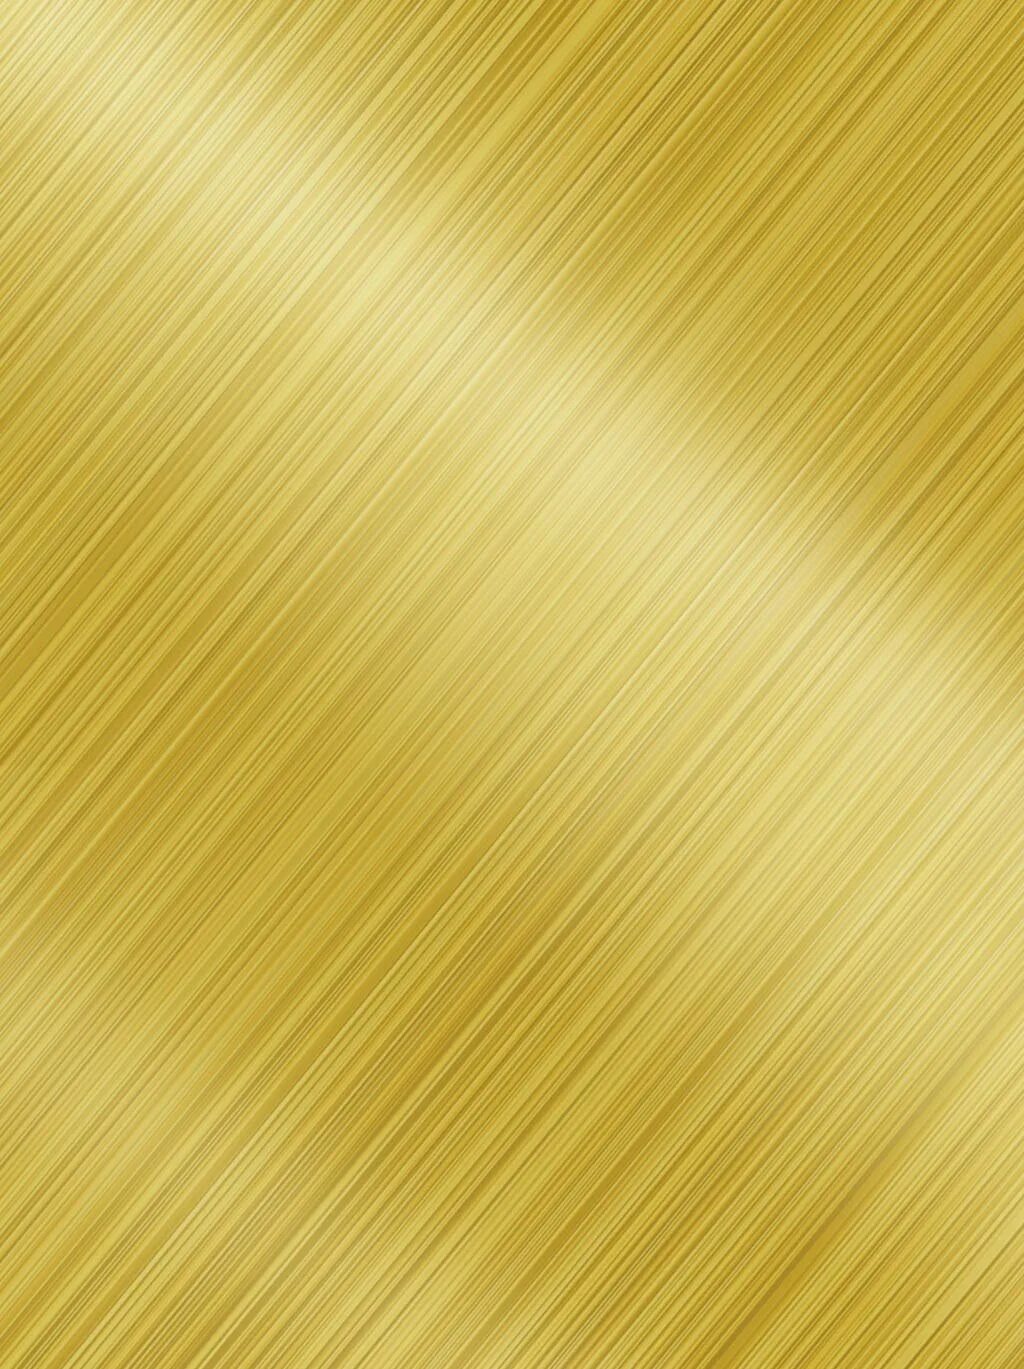 Шлифованное золото. Золото металлик lx19240. Золото фон. Золото текстура. Золотой цвет.